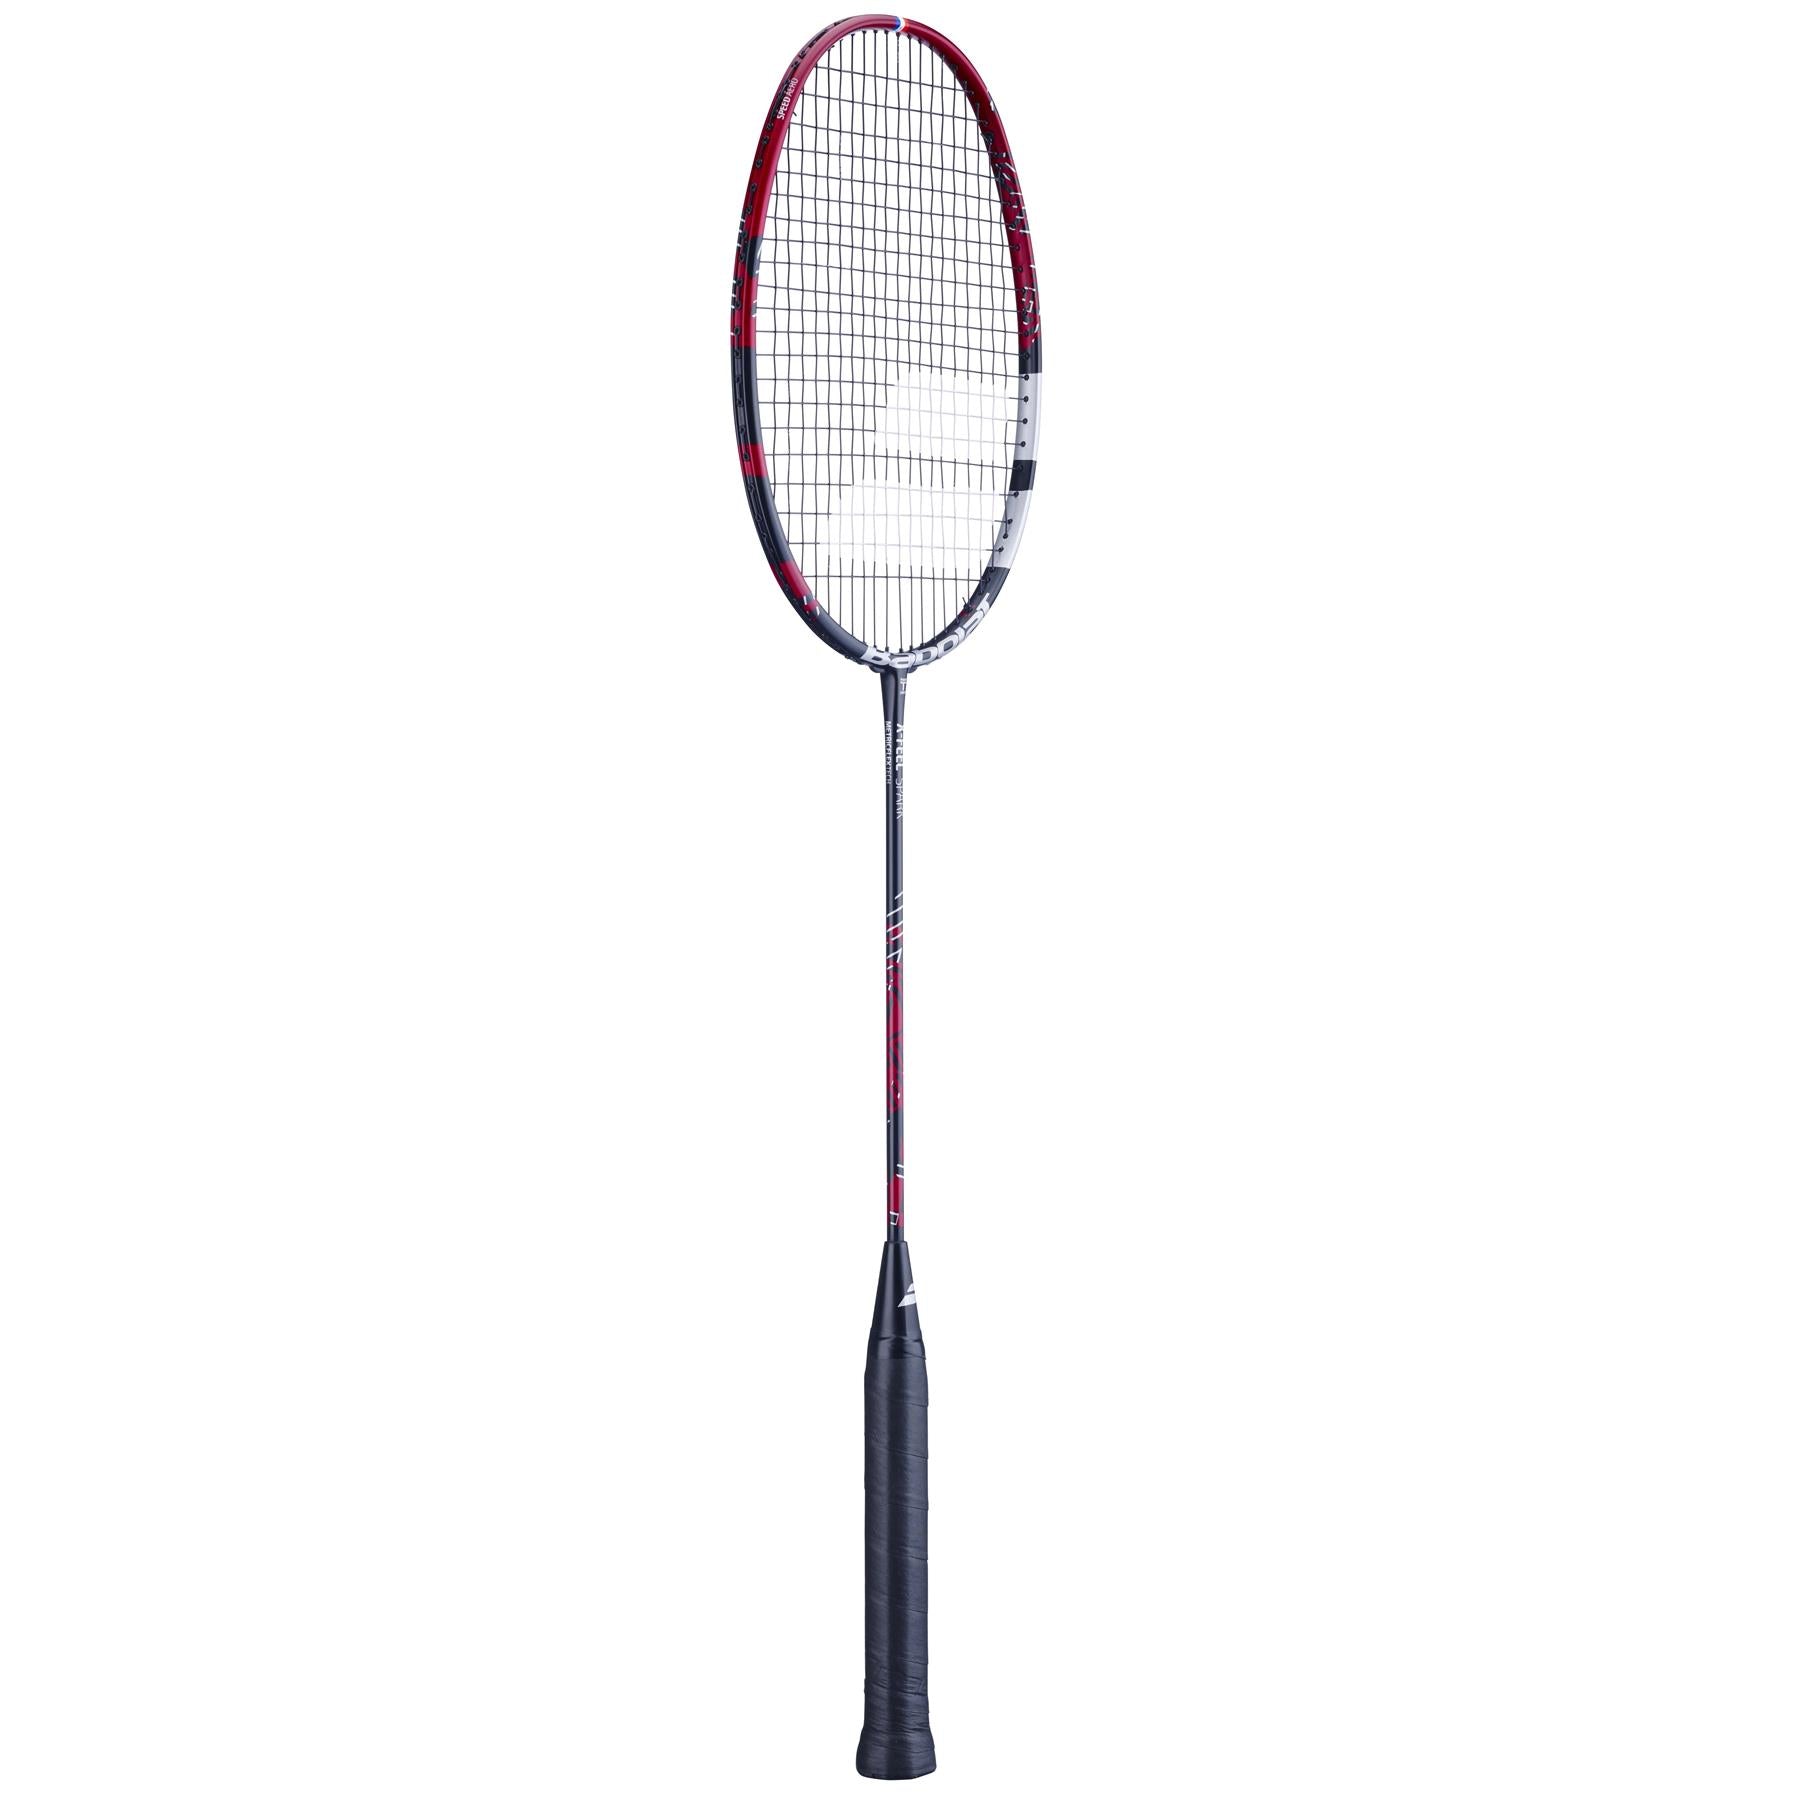 Babolat X-Feel Spark Badminton Racket - Red / Black - Right